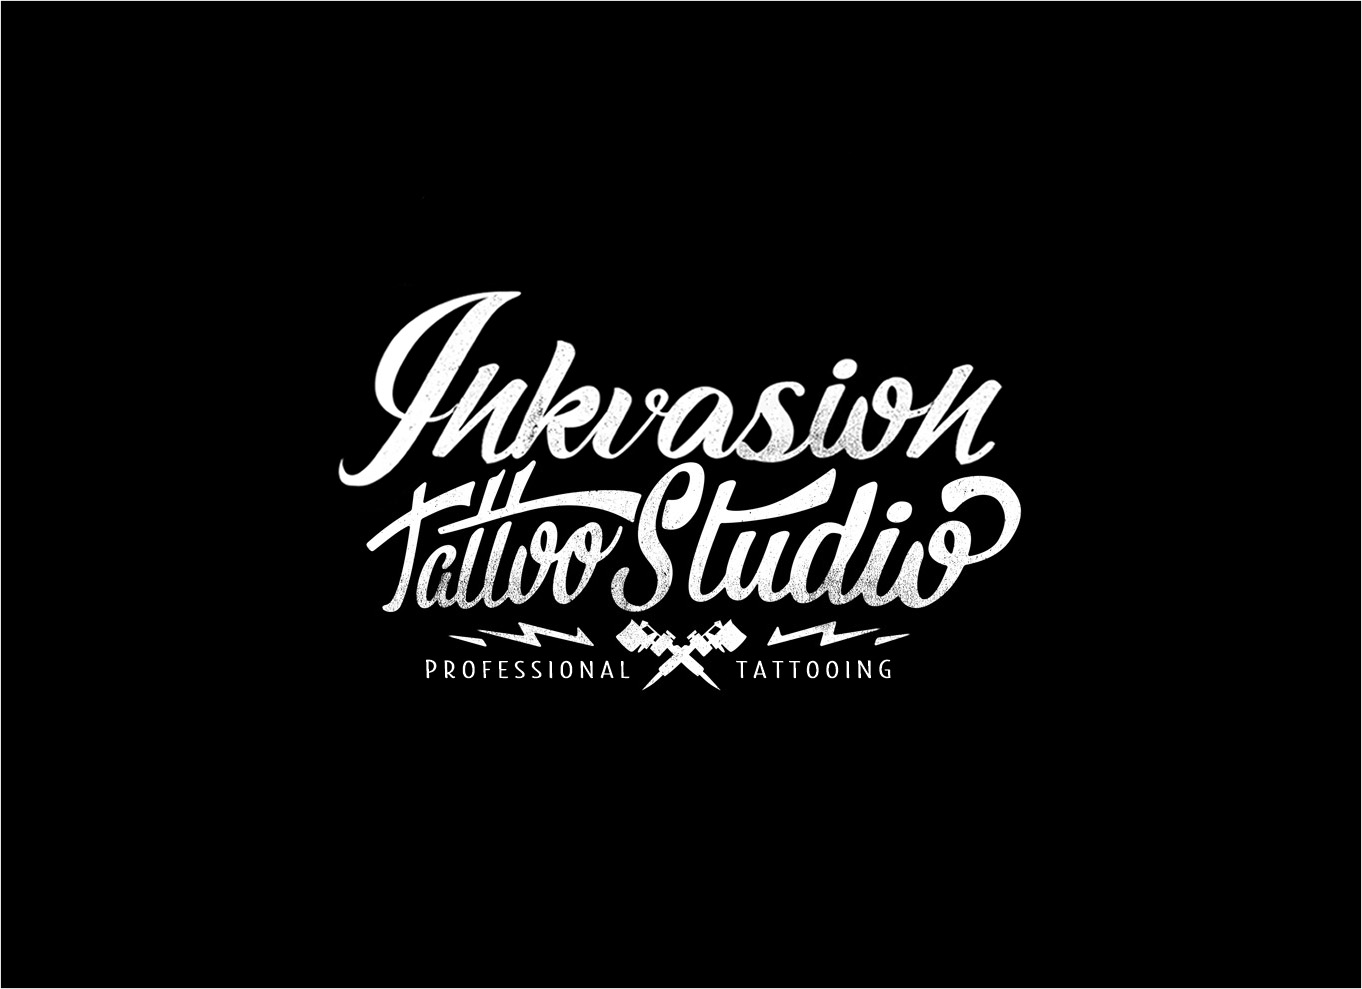 Image for Inkvasion Tattoo Studio & Tattoo Shop in Singapore